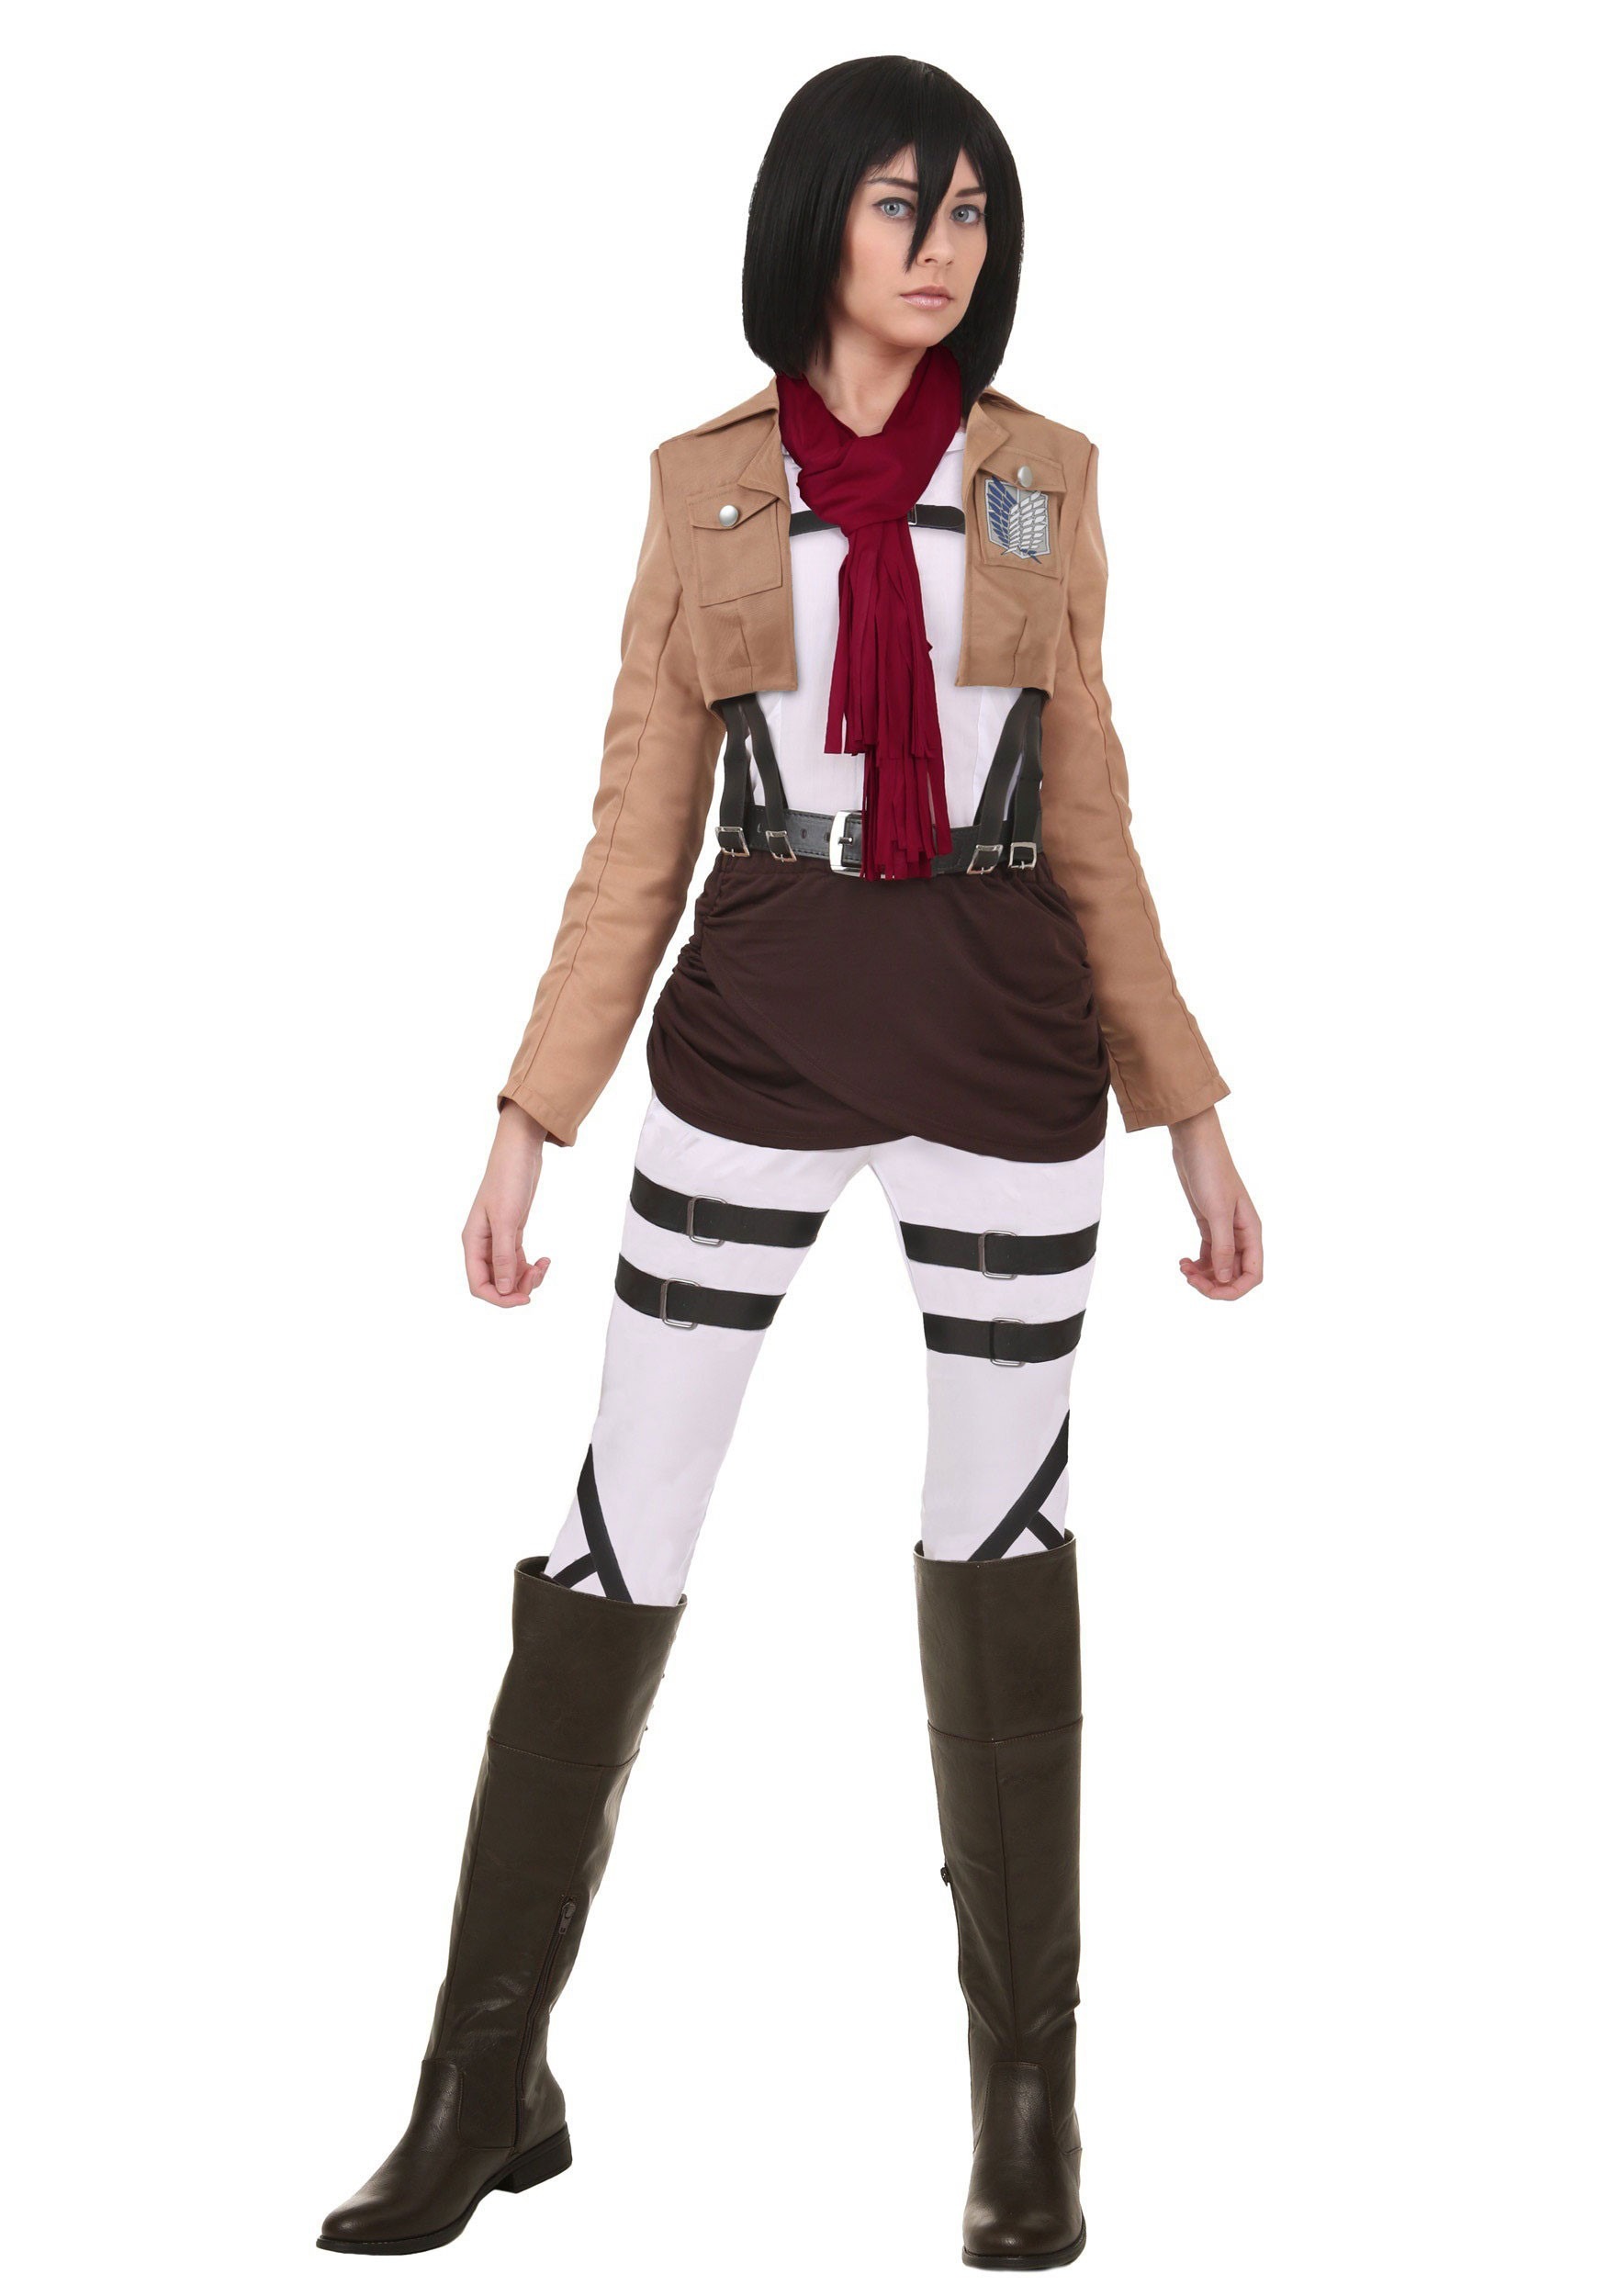 Image of Attack on Titan Mikasa Costume | Adult Anime Cosplay ID FUN2270AD-L